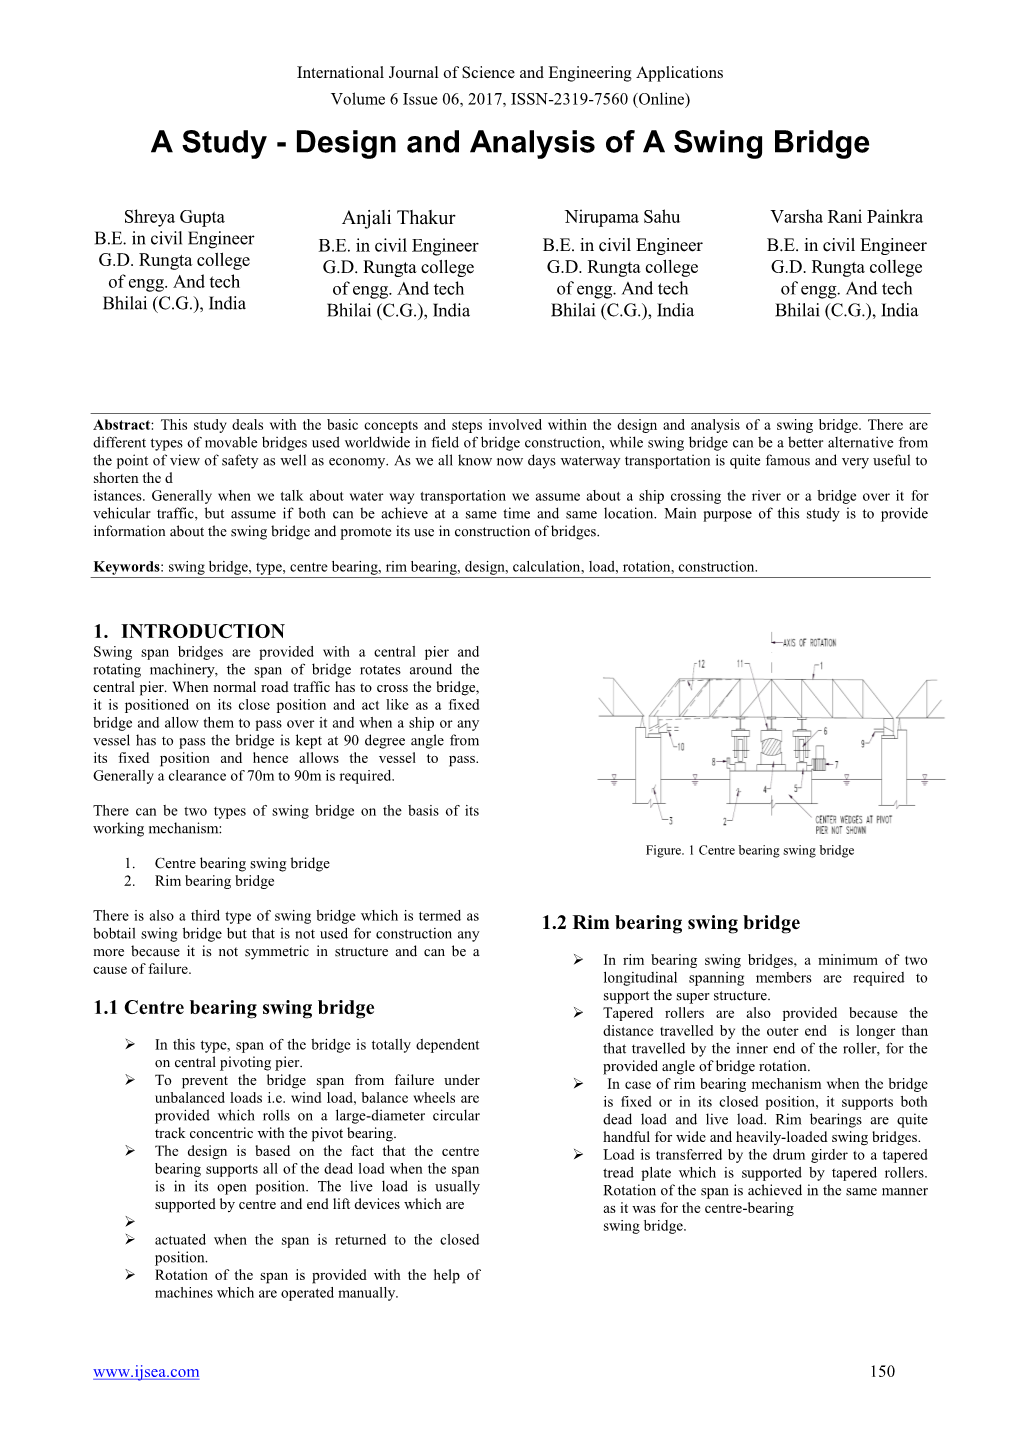 Design and Analysis of a Swing Bridge